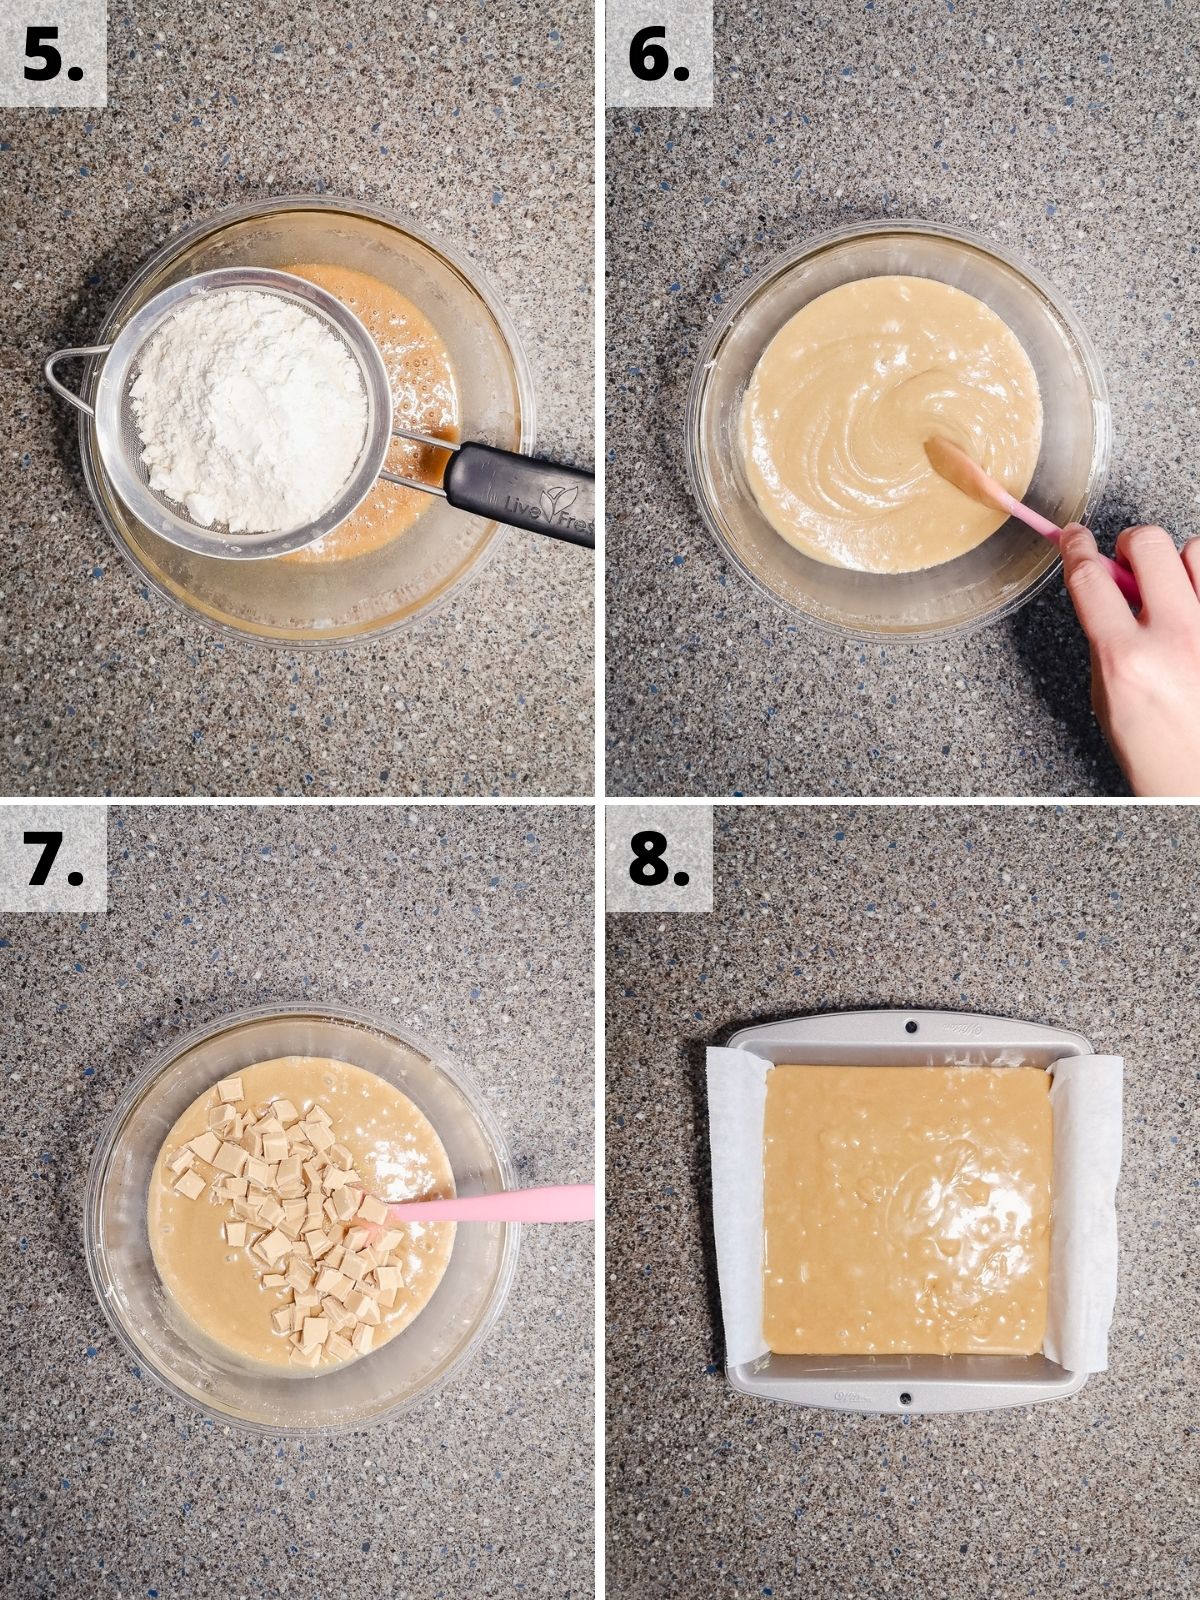 Caramilk blondies recipe method steps 5 - 8